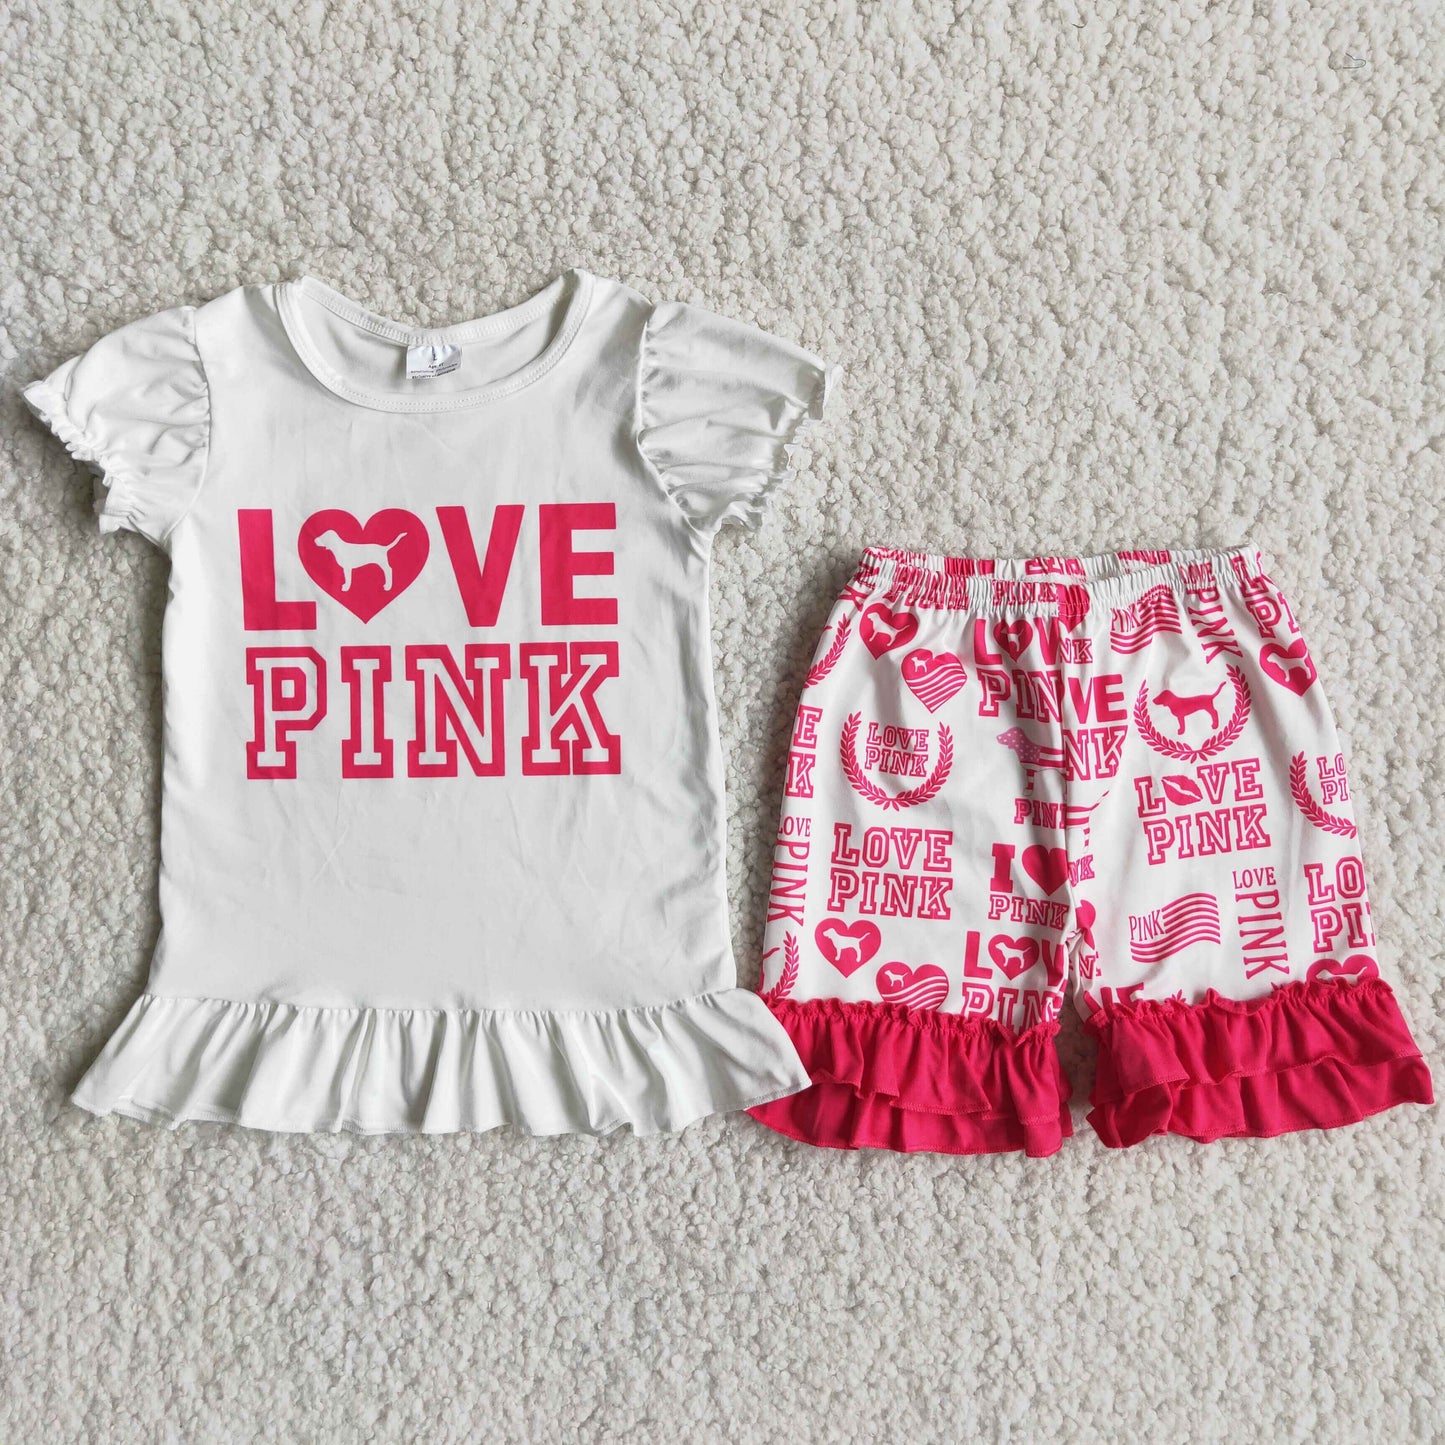 Love pink shirt match ruffle shorts kids clothing set